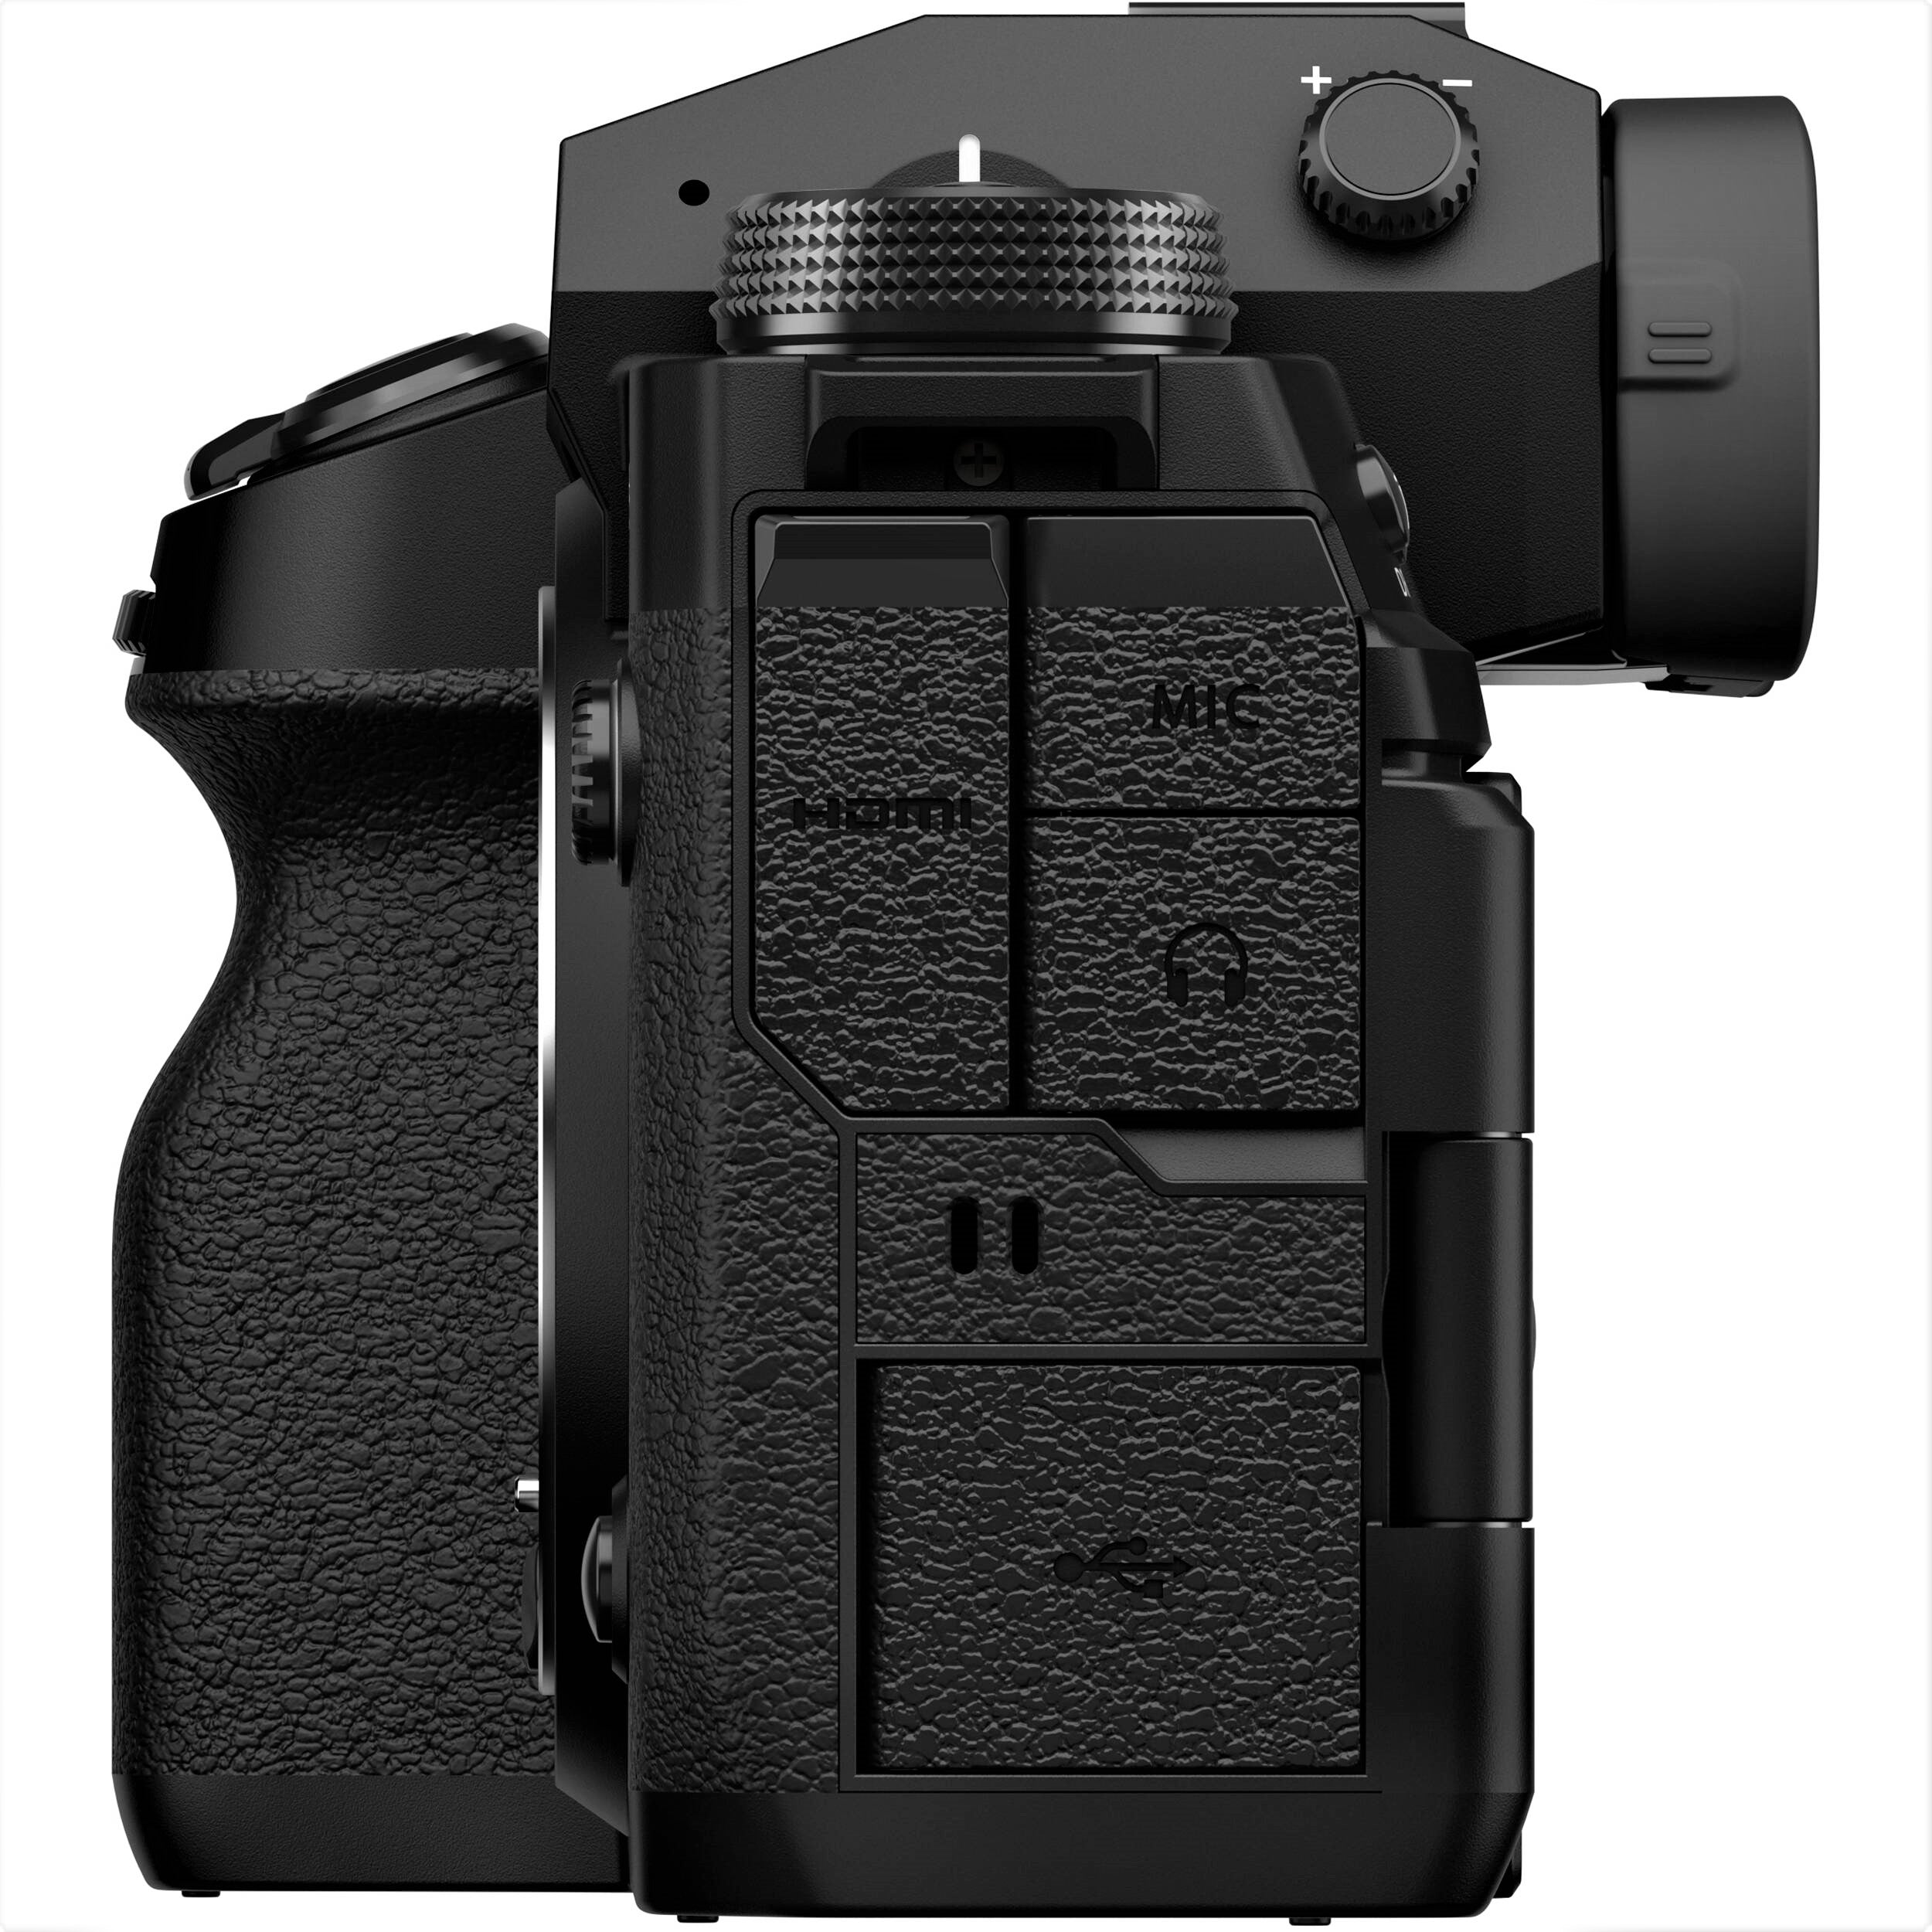 Fujifilm X-H2S Mirrorless Camera - Side View